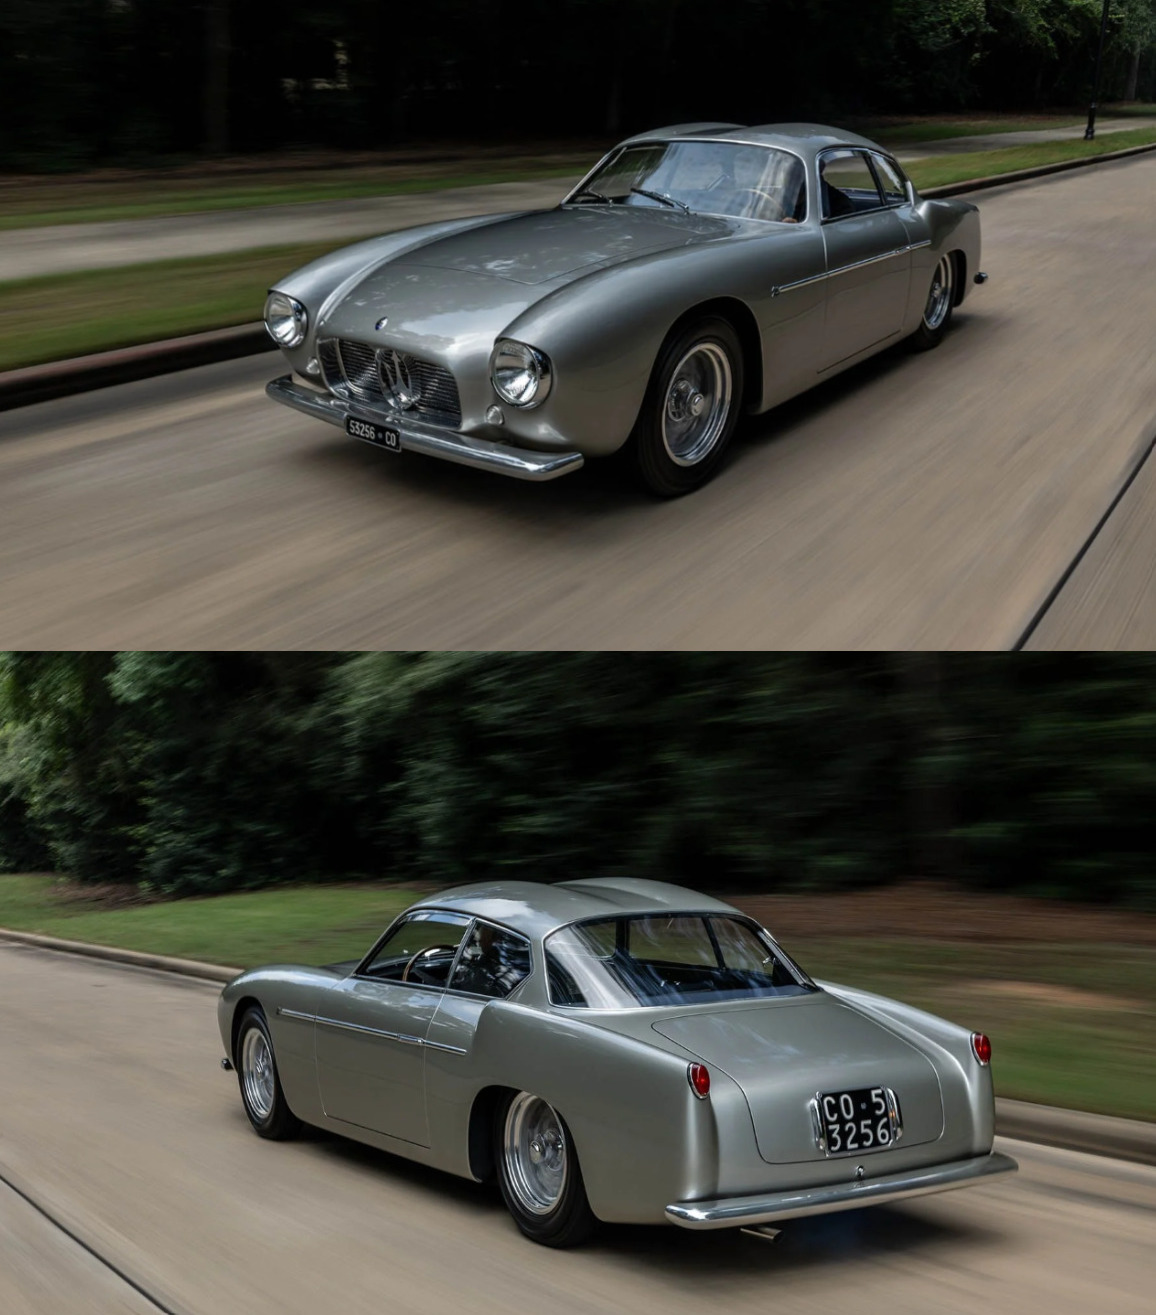 1156x1315, 276 Kb / автомобиль, классика, ретро, Maserati, купе